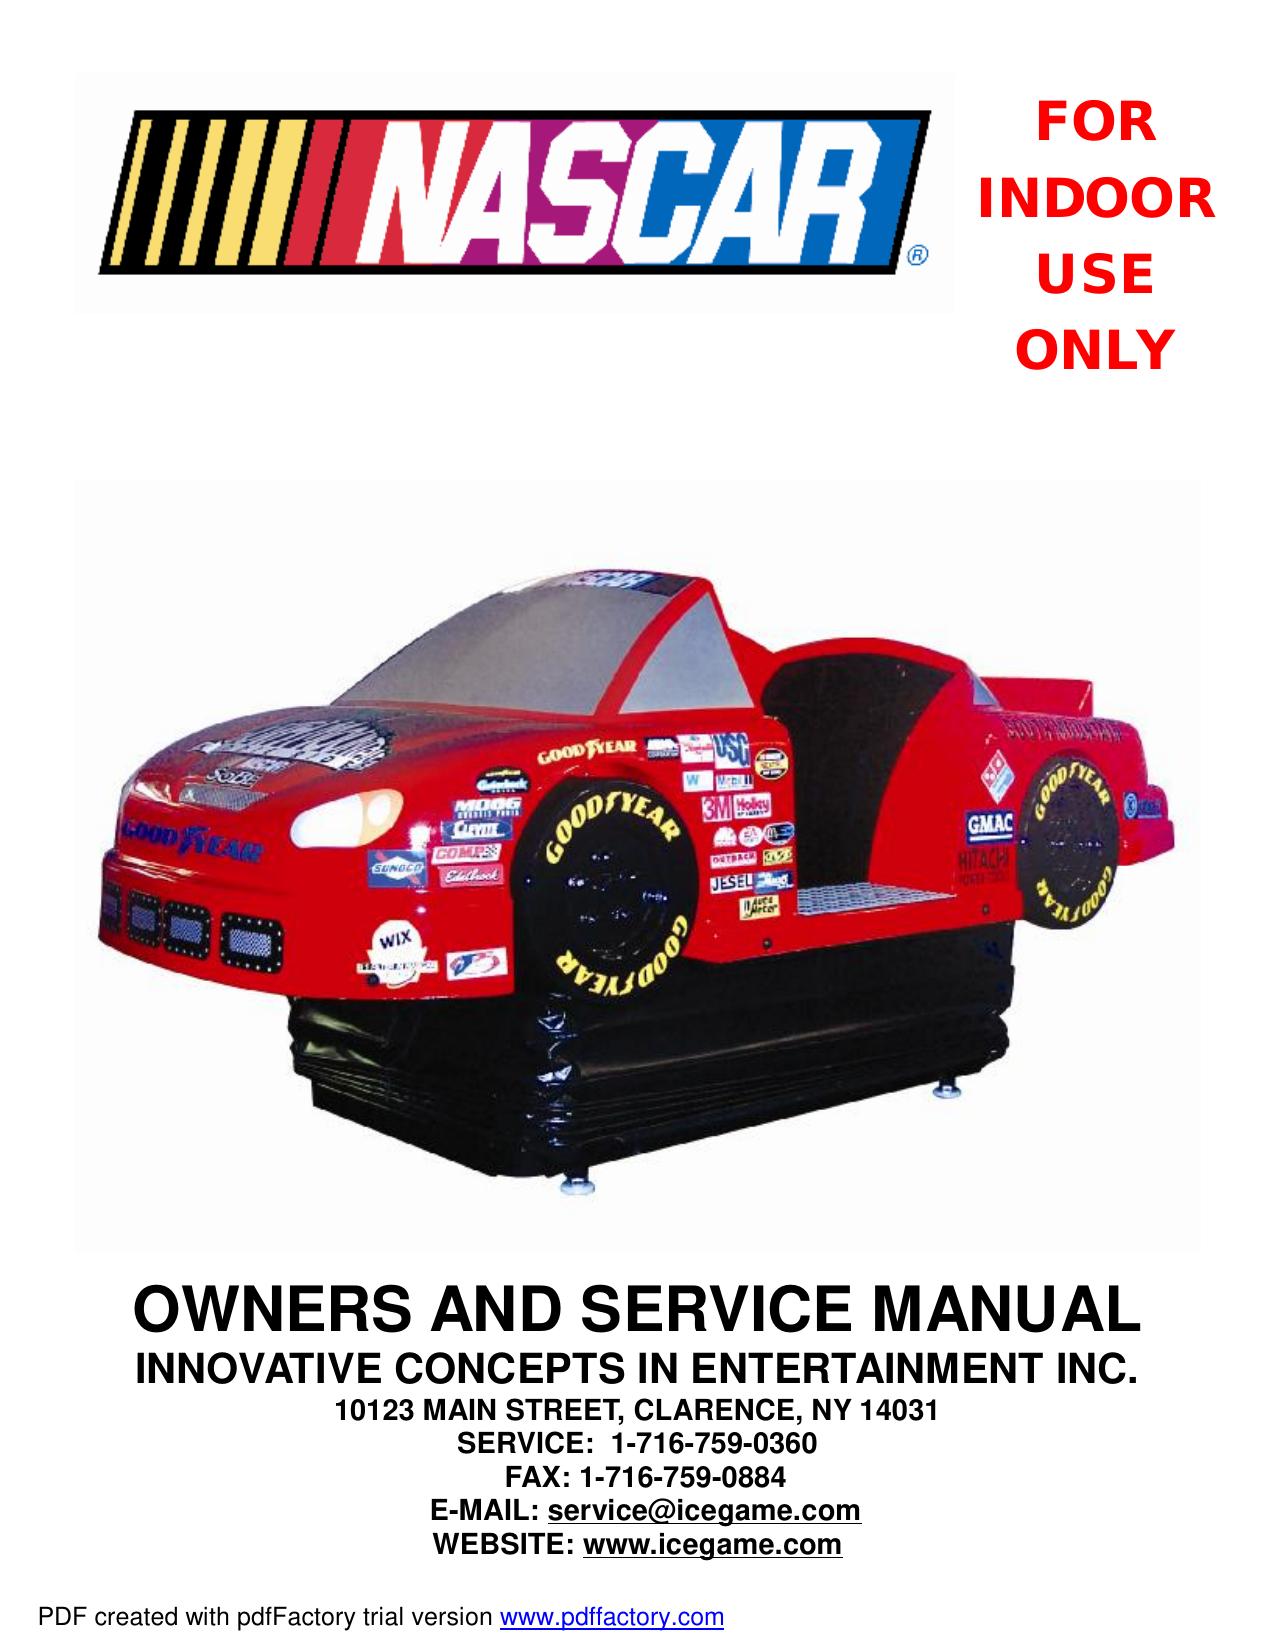 NASCAR Service Manual - 11-17-04.pub